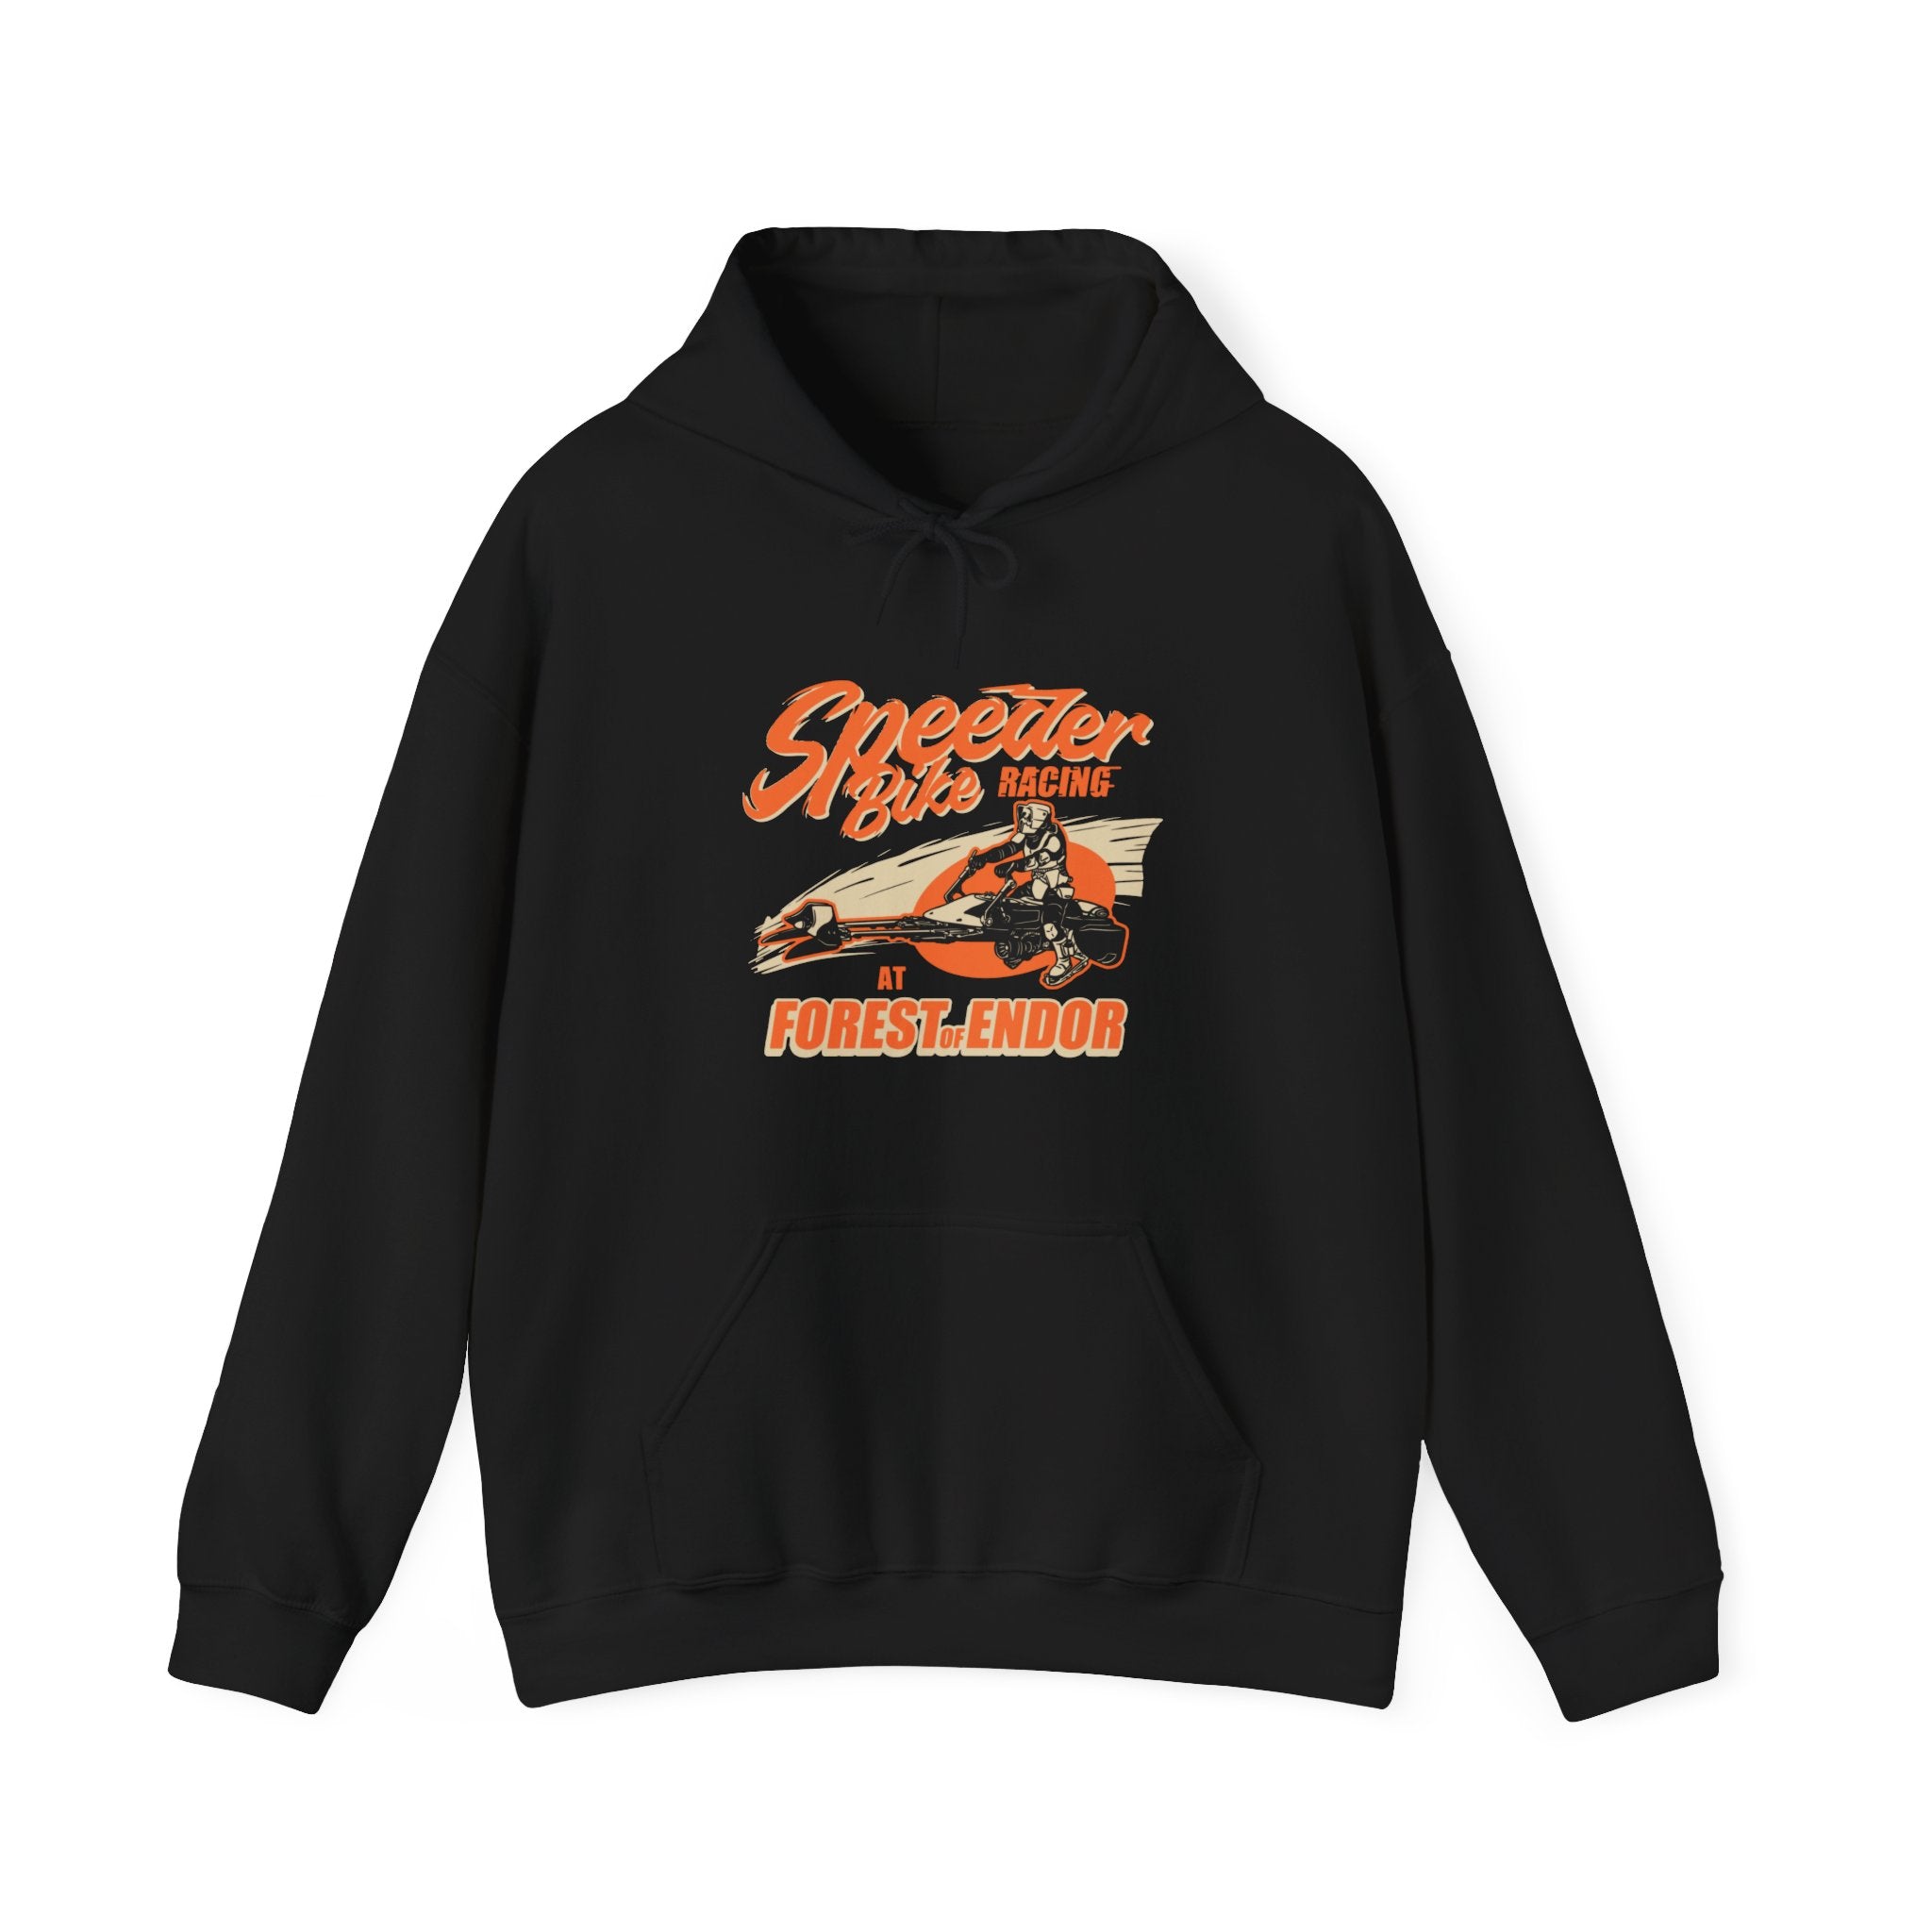 Speeder Bike Racing - Hooded Sweatshirt